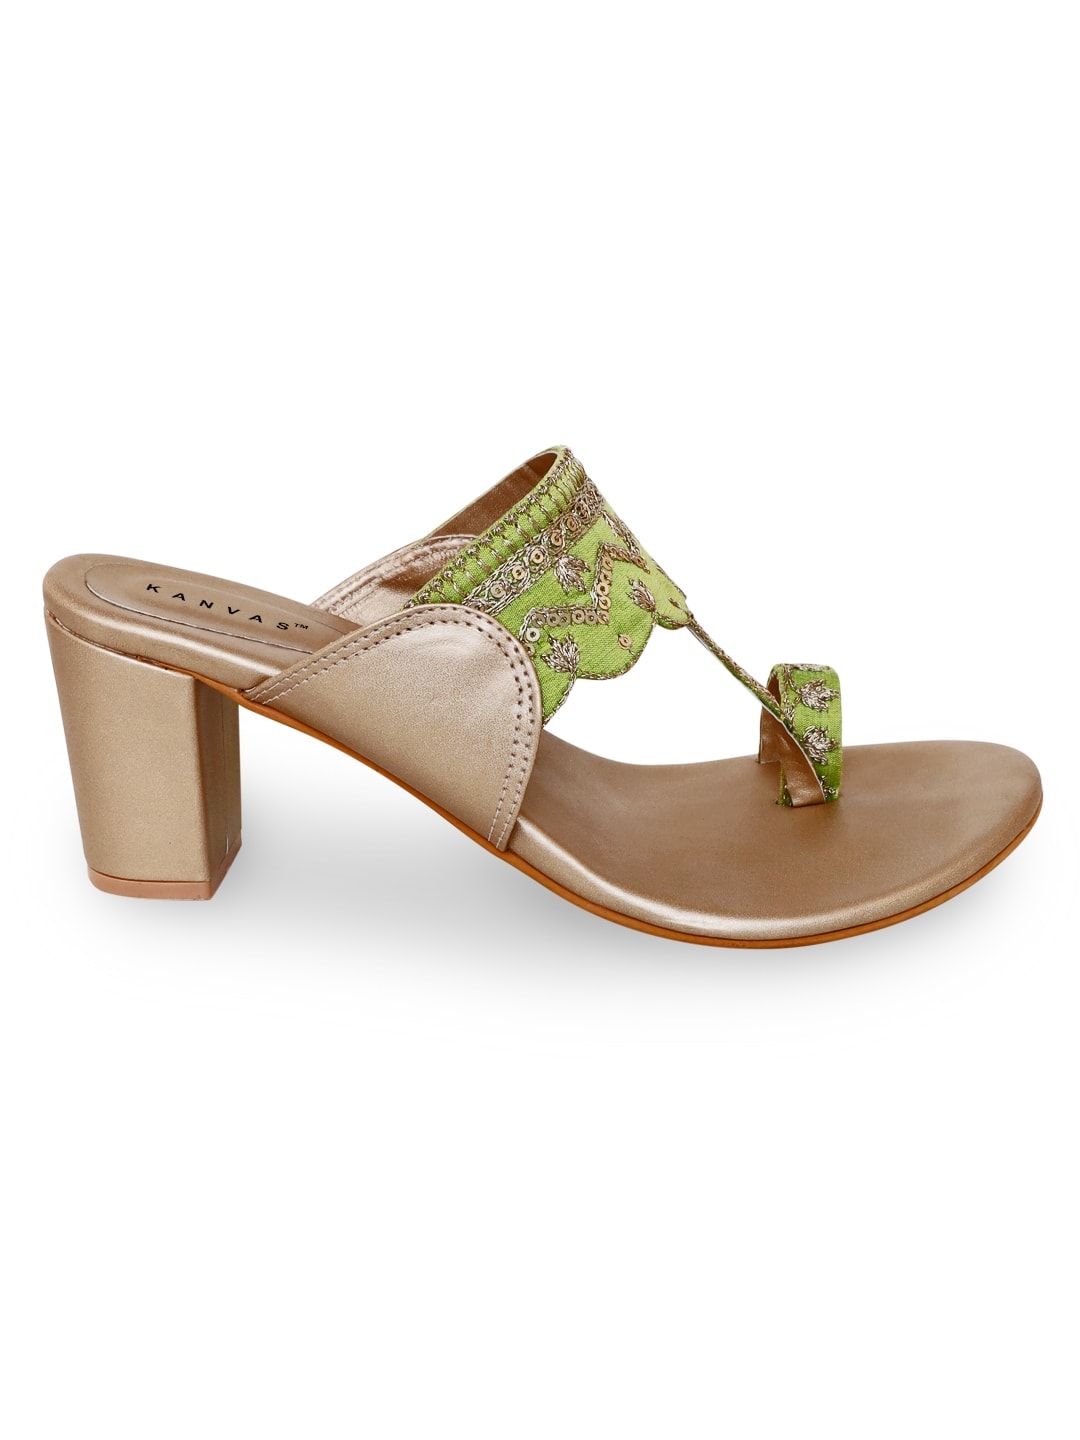 Buy Mochi Women Gold Party Sandals Online | SKU: 35-4943-15-36 – Mochi Shoes